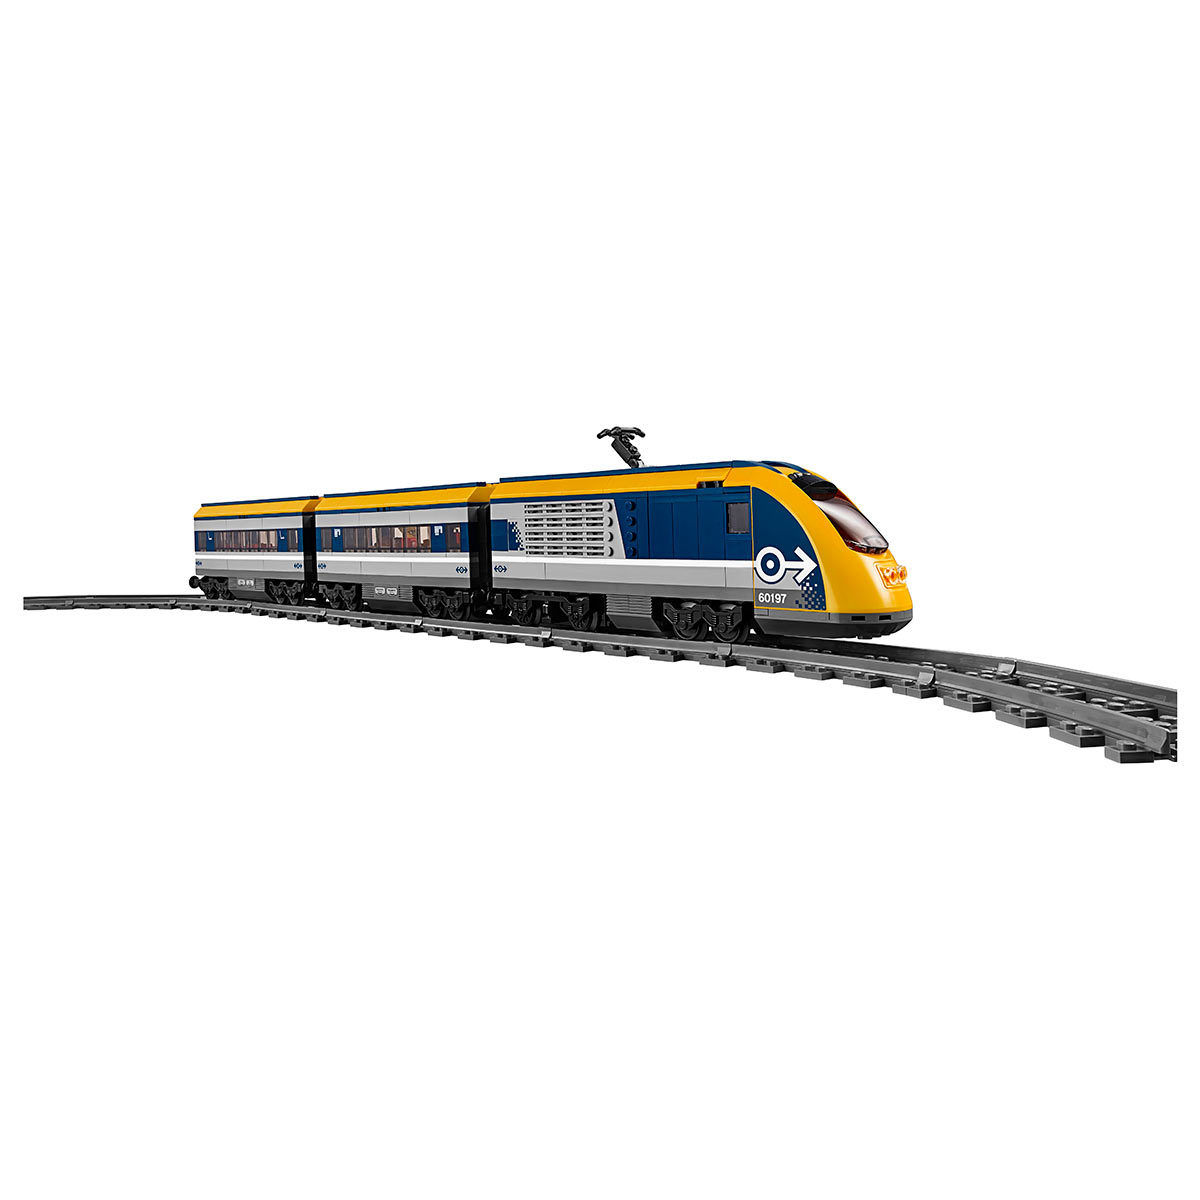 LEGO City Passenger Train - Model 60197 (6-12 Years)